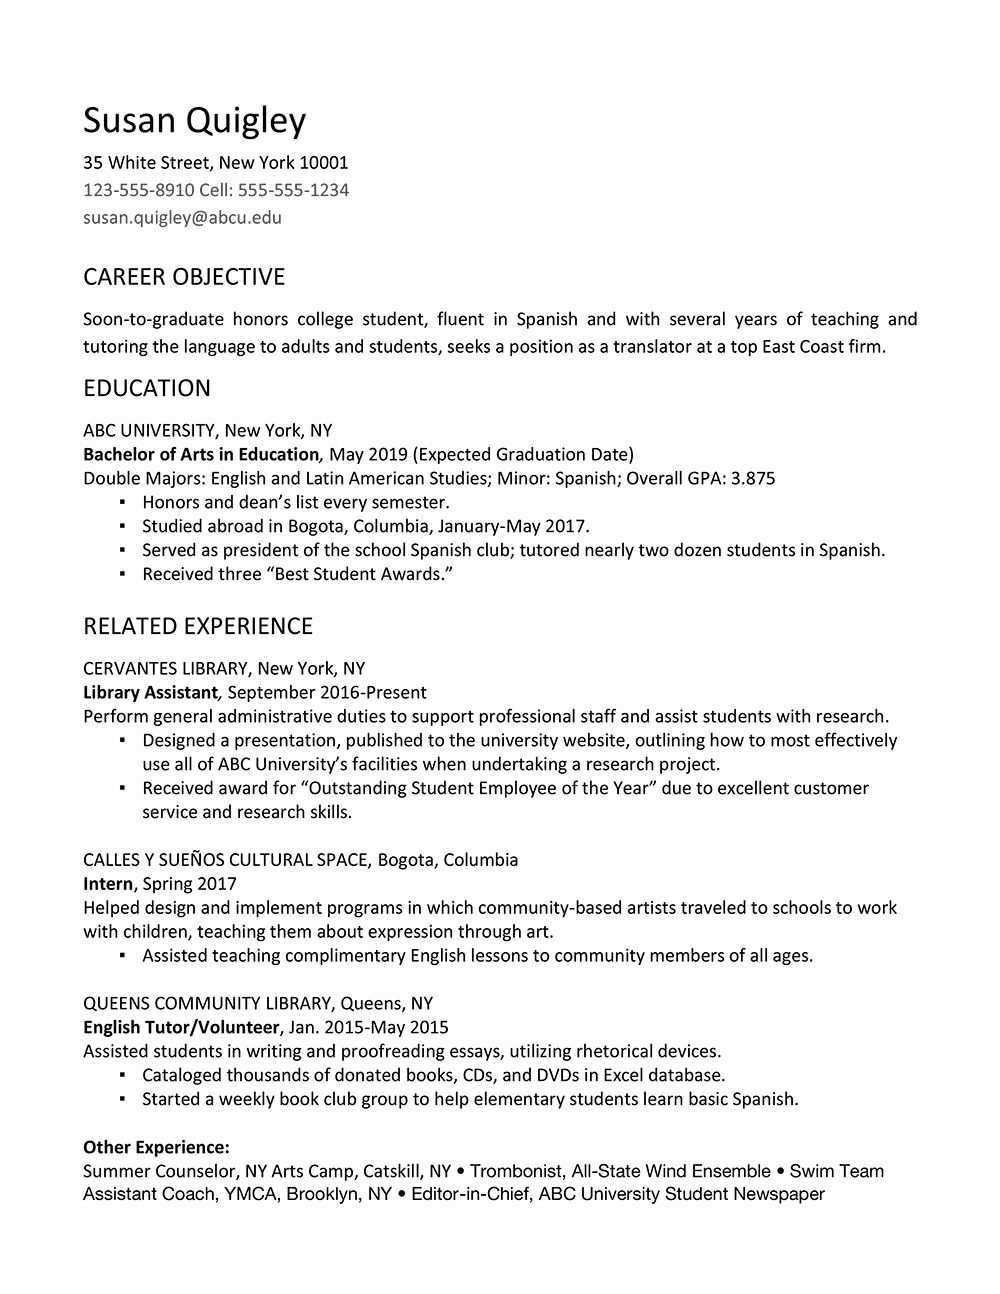 Sample Resume for College Graduate New Job Resume for Fresh Graduate College